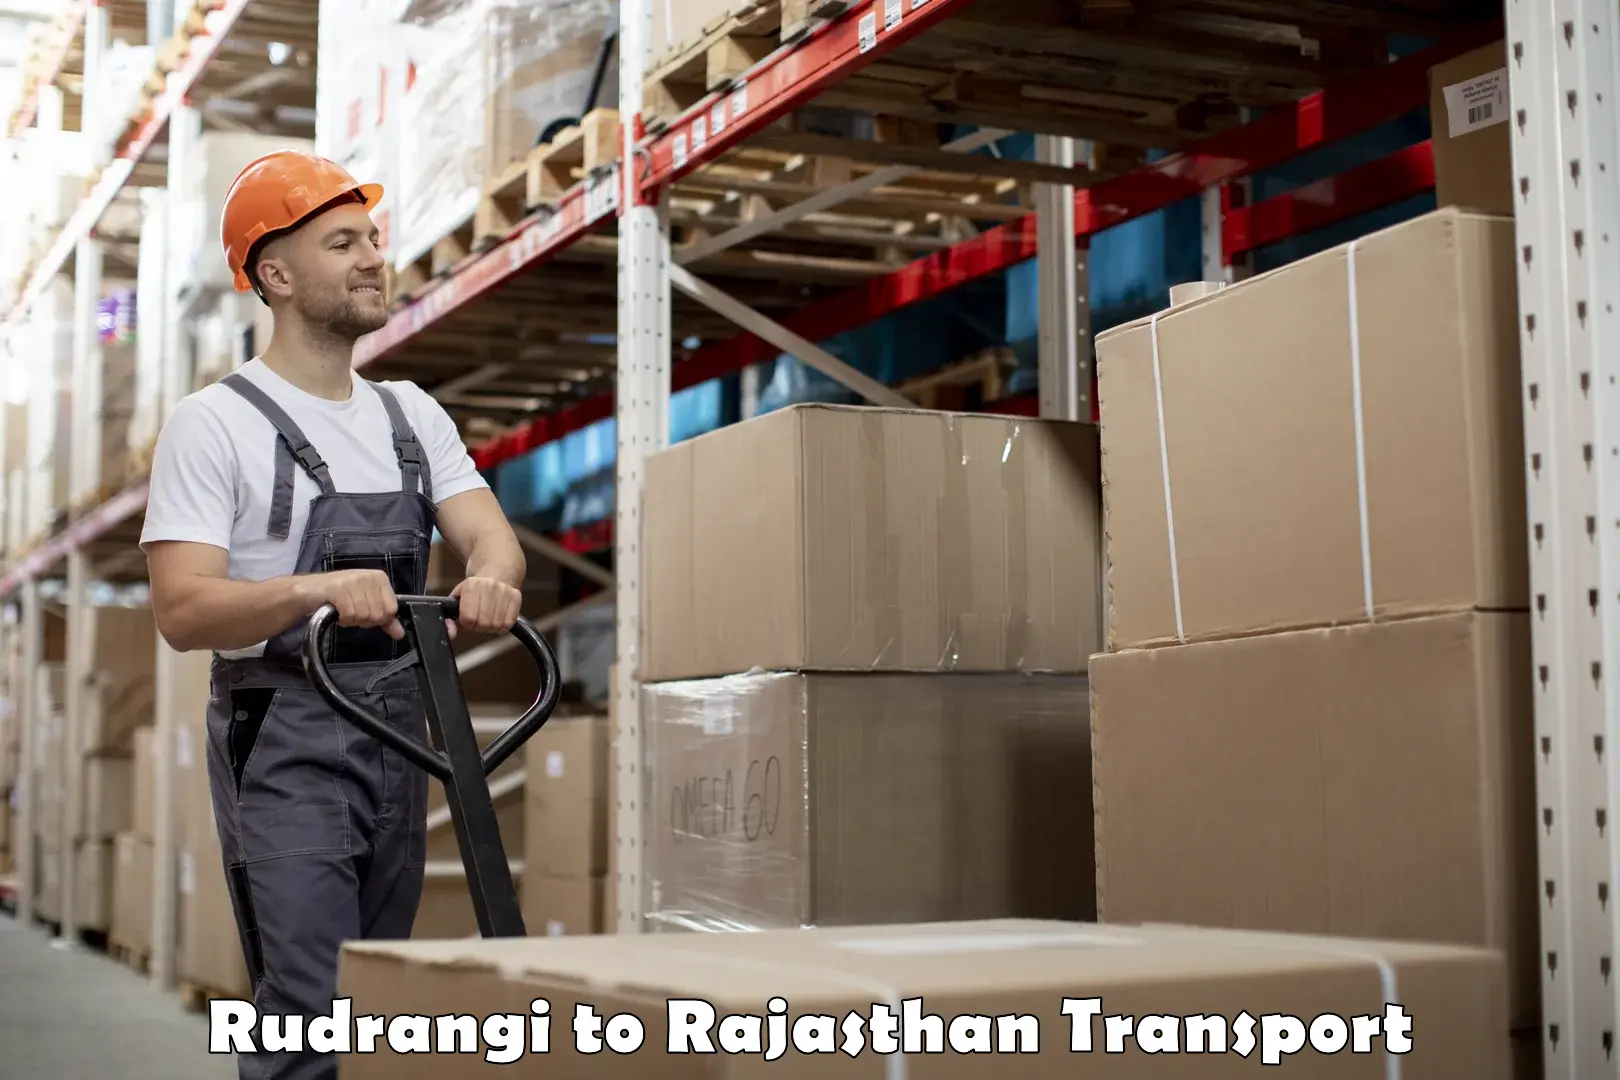 Truck transport companies in India Rudrangi to Keshoraipatan